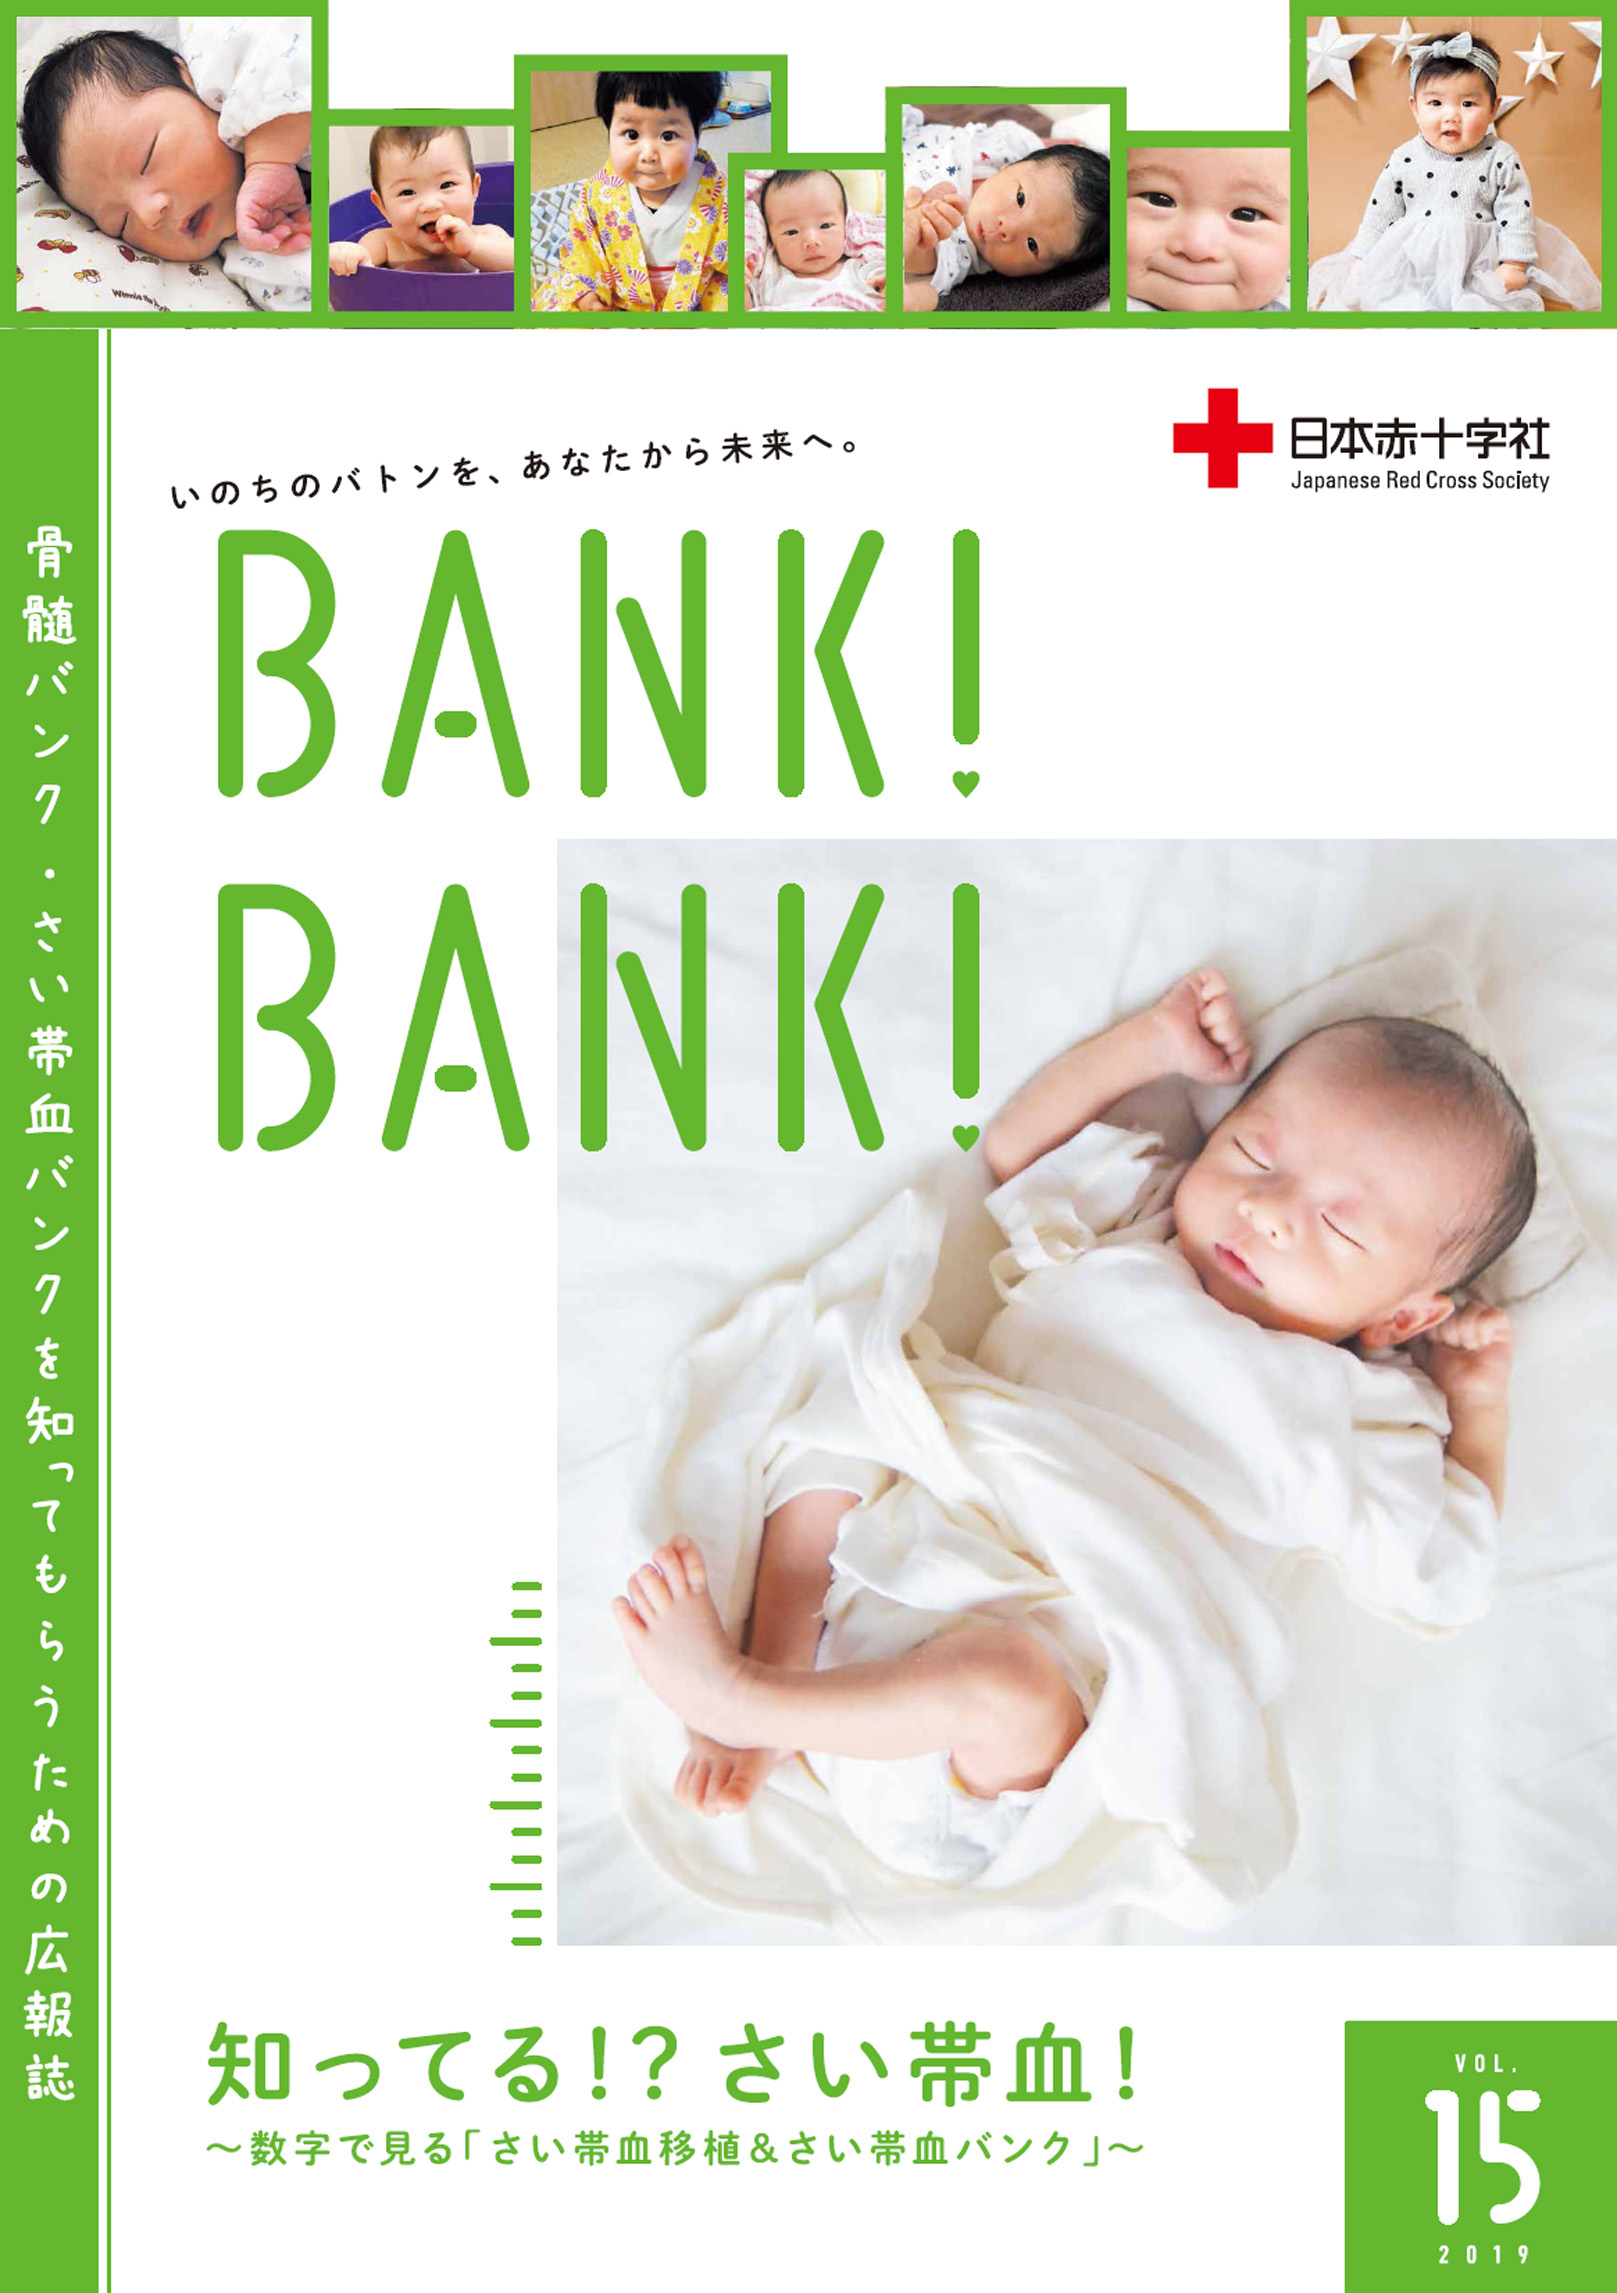 bankbank_15_001.jpg